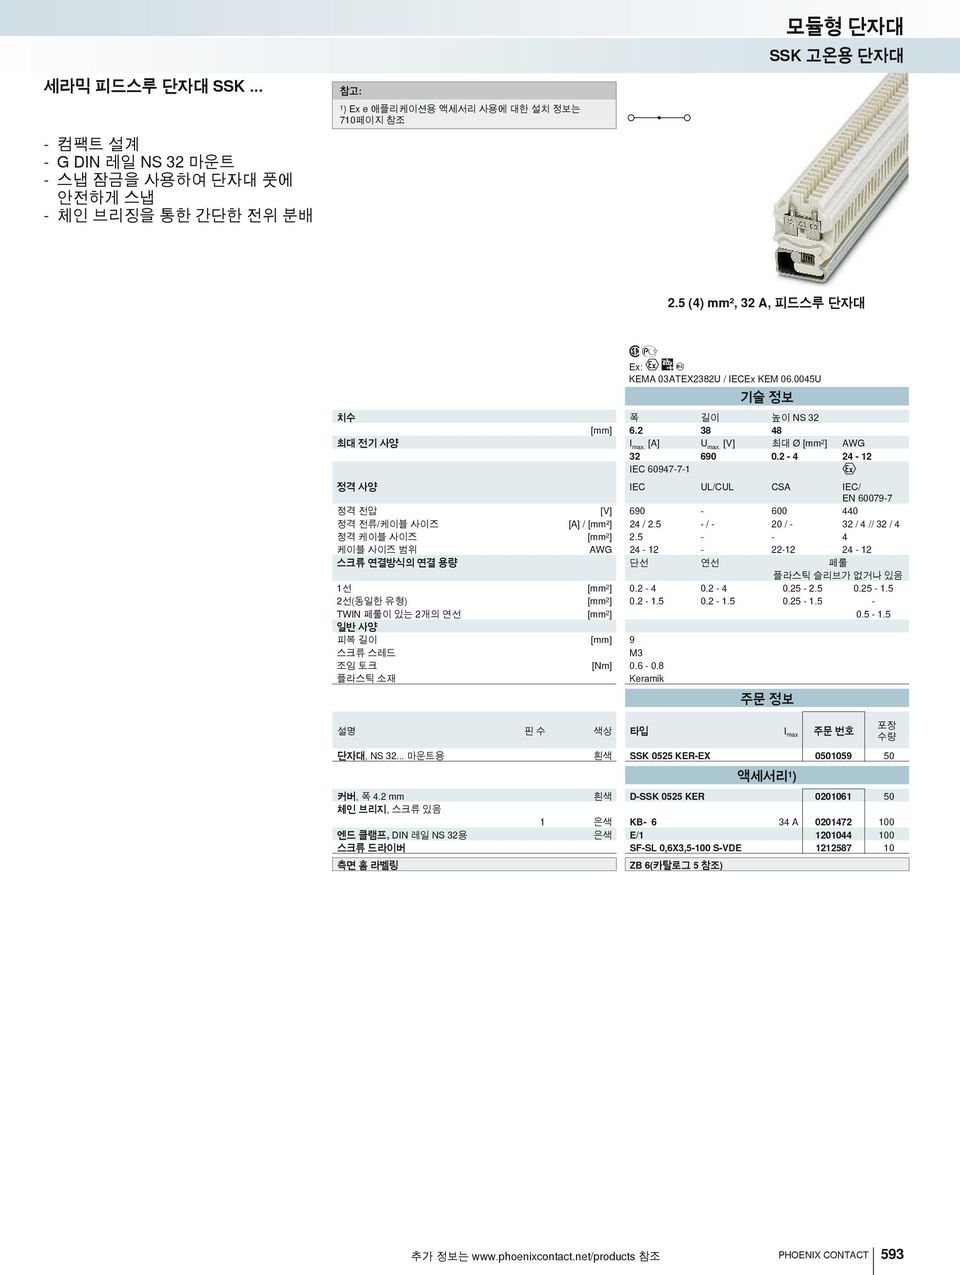 2-4 24-12 IEC 60947-7-1 정격 사양 IEC UL/CUL CSA IEC/ 정격 전압 [V] 690-600 440 정격 전류/케이블 사이즈 [A] / [mm²] 24 / 2.5 - / - 20 / - 32 / 4 // 32 / 4 정격 케이블 사이즈 [mm 2 ] 2.